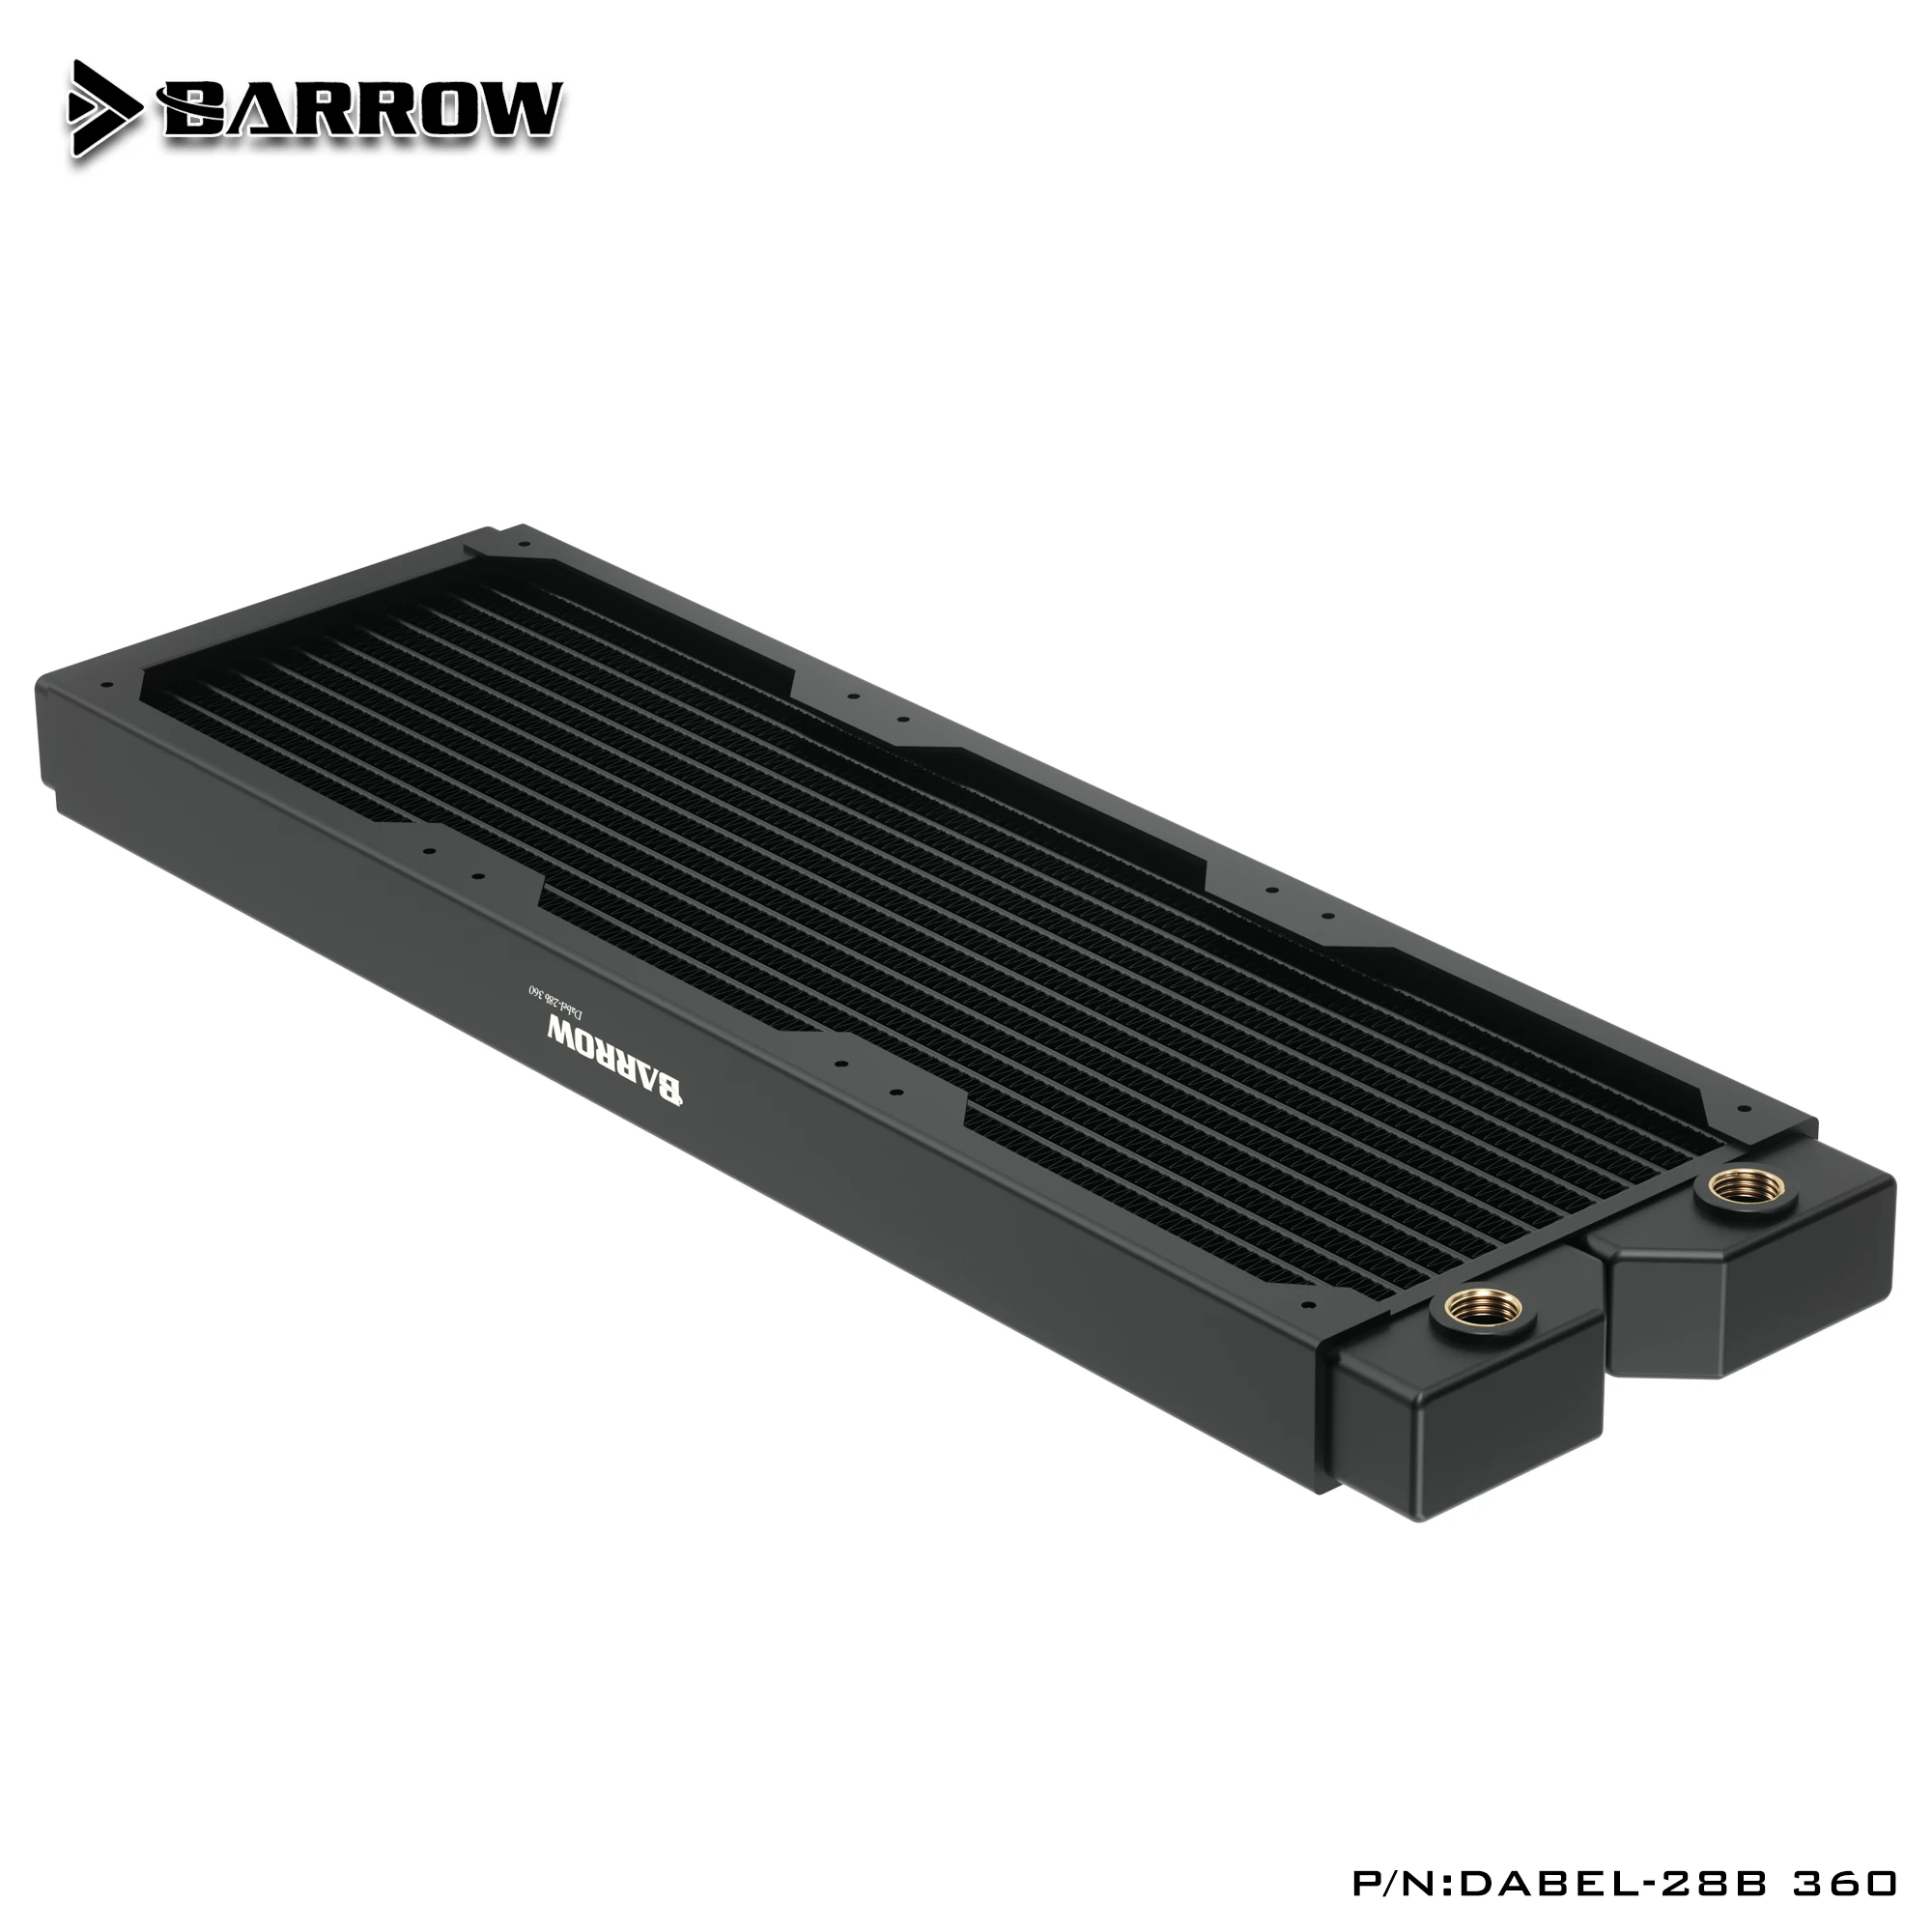 Barrow Dabel-28b 360mm 3x12cm Copper Radiator Heat Exchanger Water Cooling enlarge